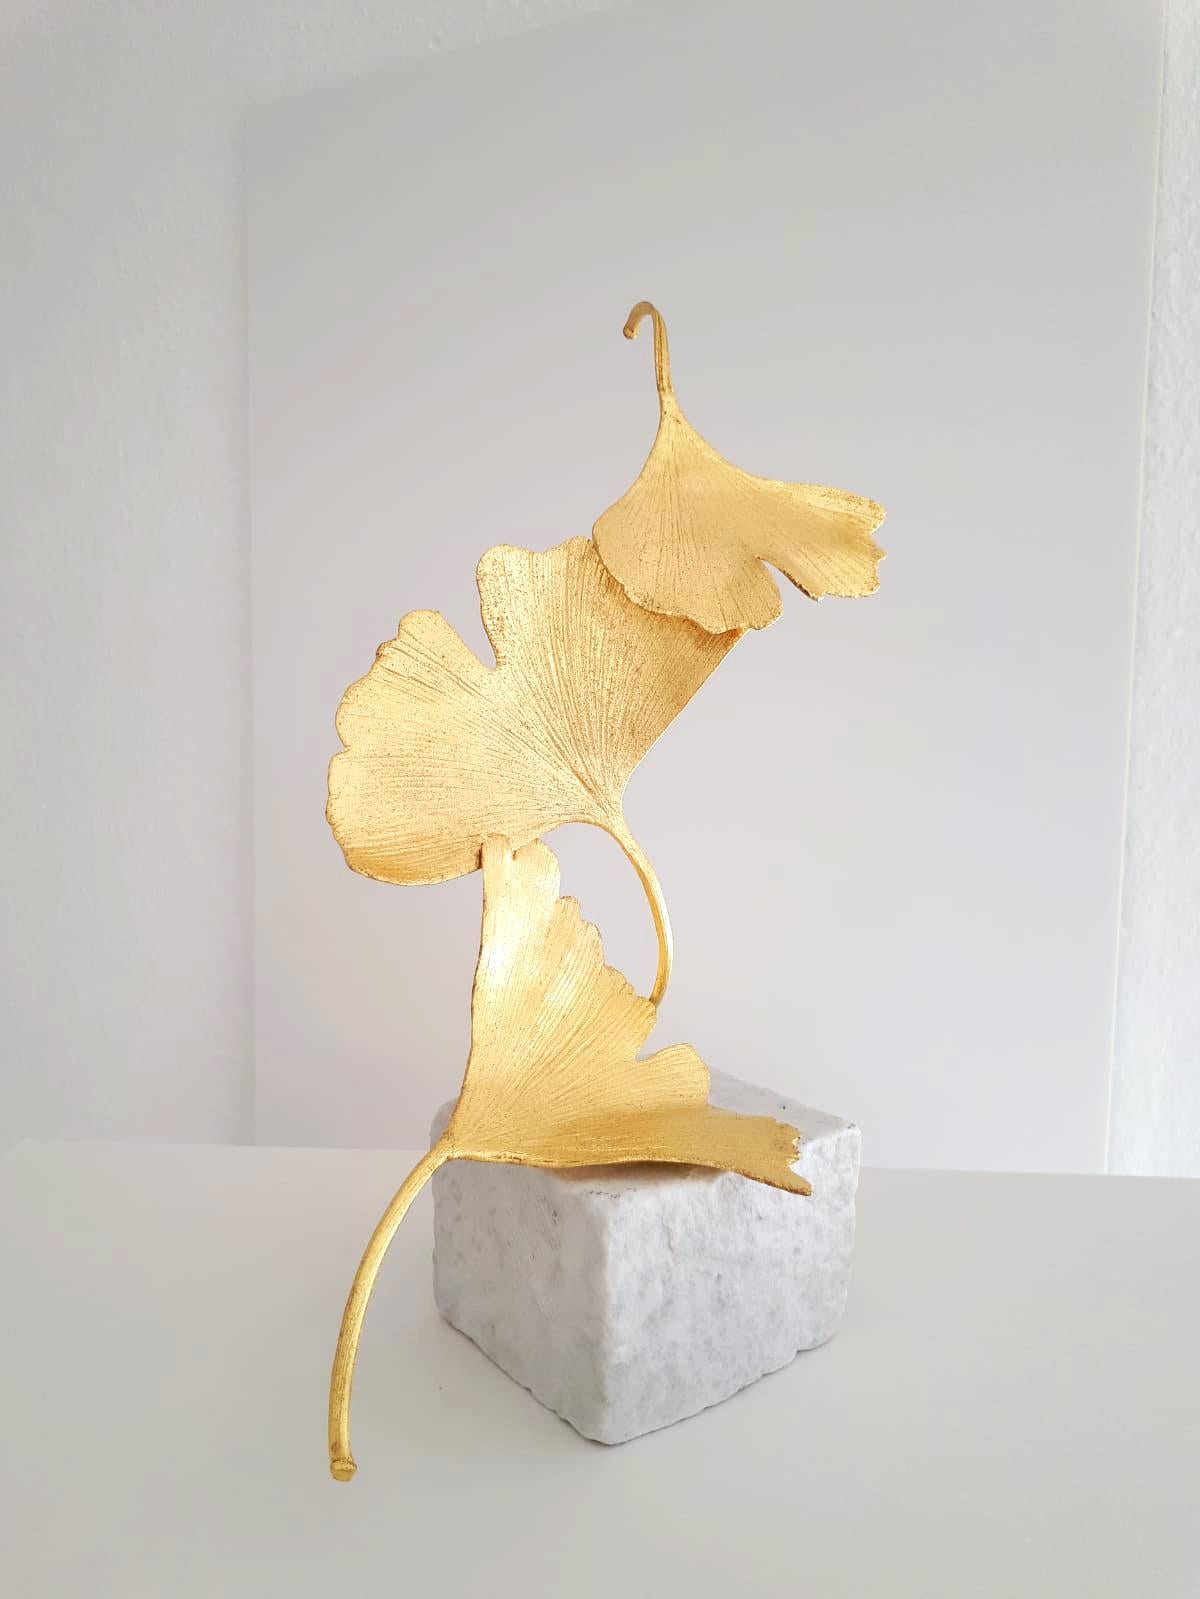 Sculpture Golden Gingko de Kuno Vollet - Sculpture en laiton doré moulé sur base en marbre blanc